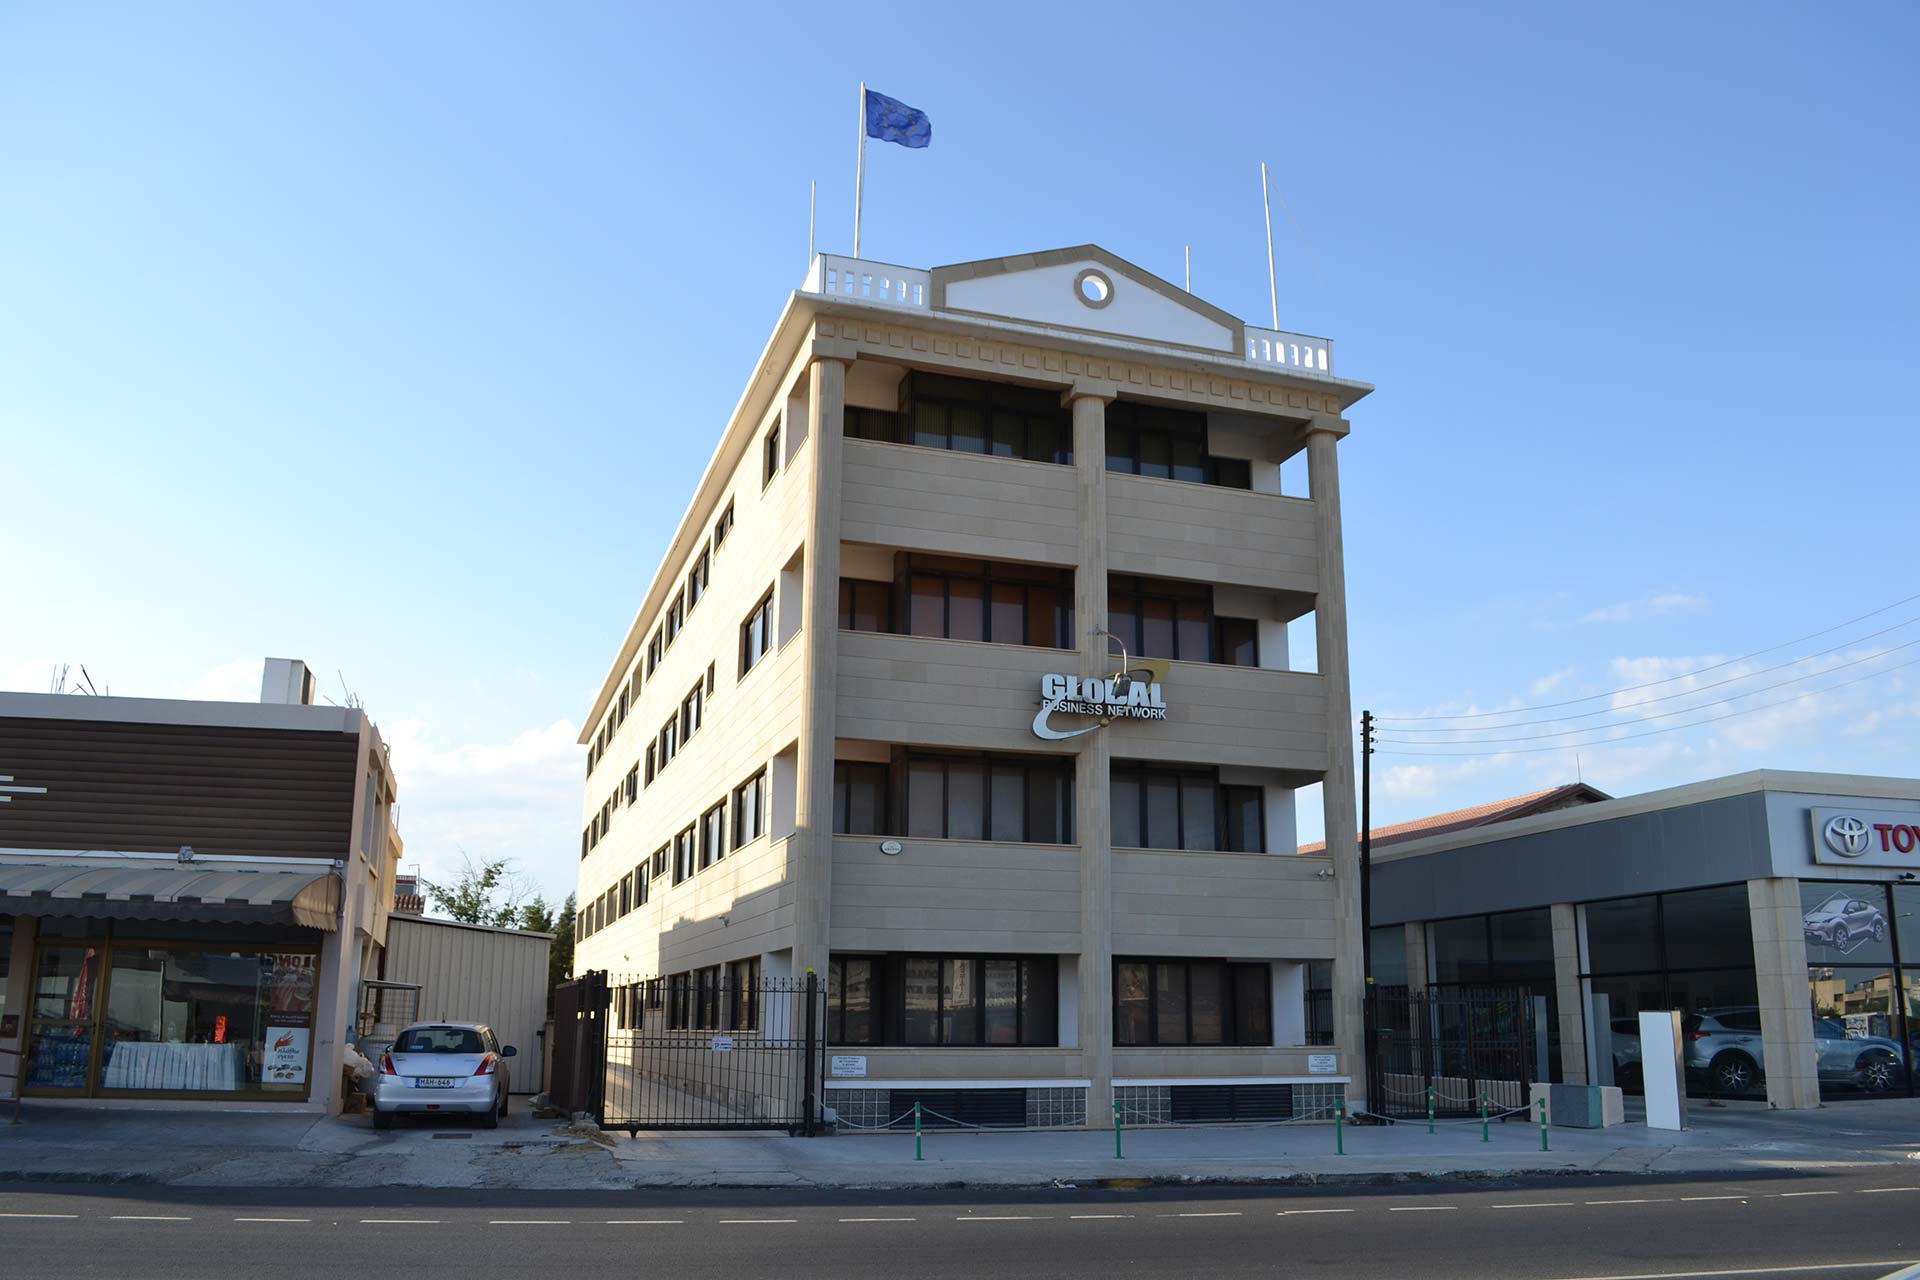 The GBNI offices in Limassol, Cyprus. Credit: Stelios Orphanides / Sara Farolfi